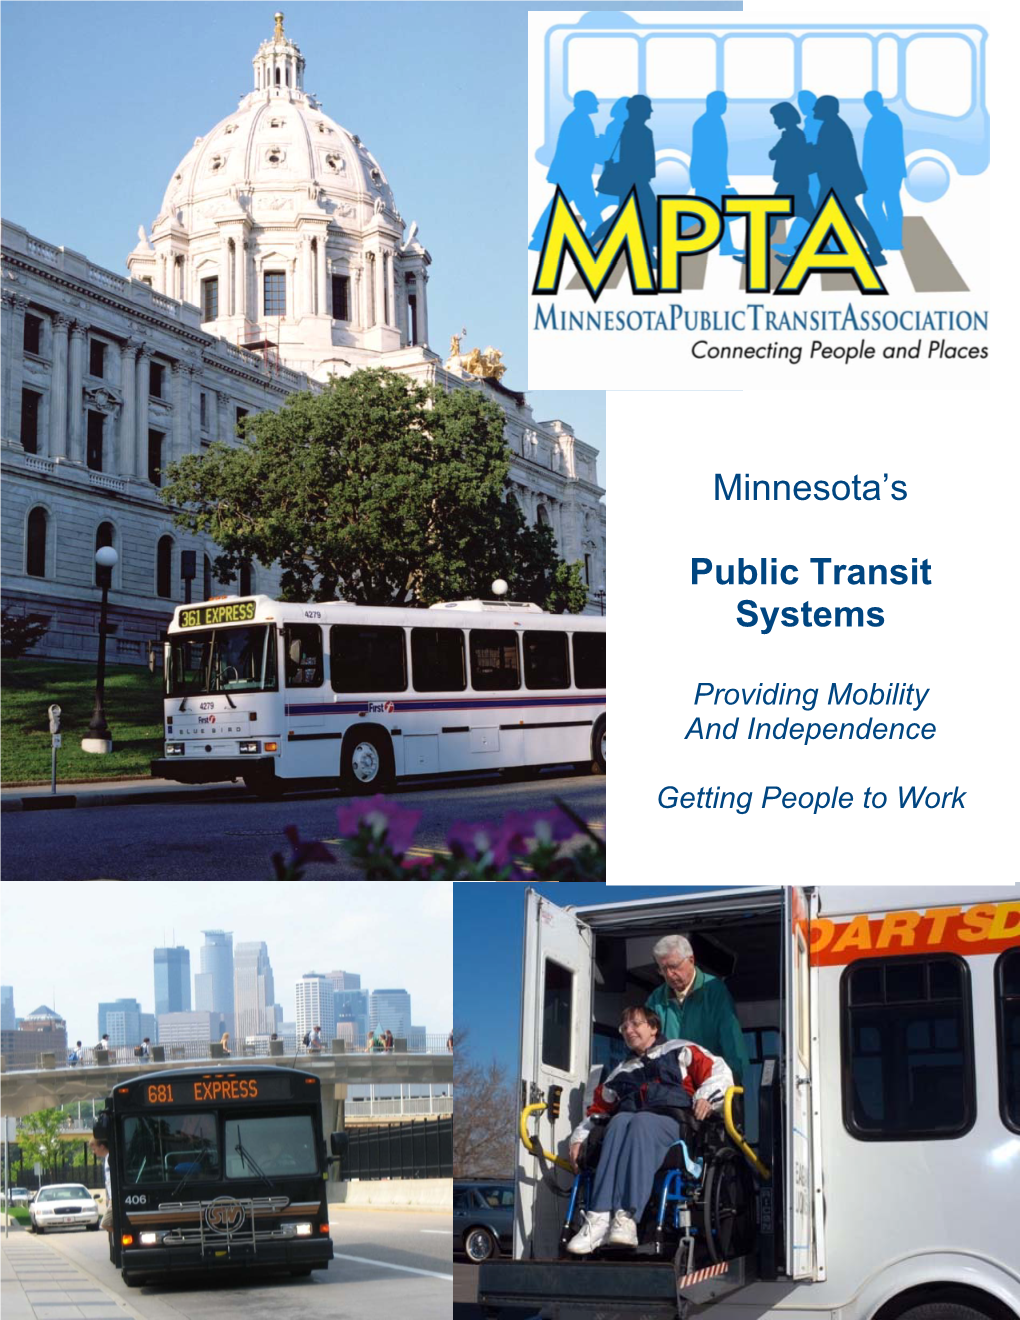 Minnesota's Public Transit Systems